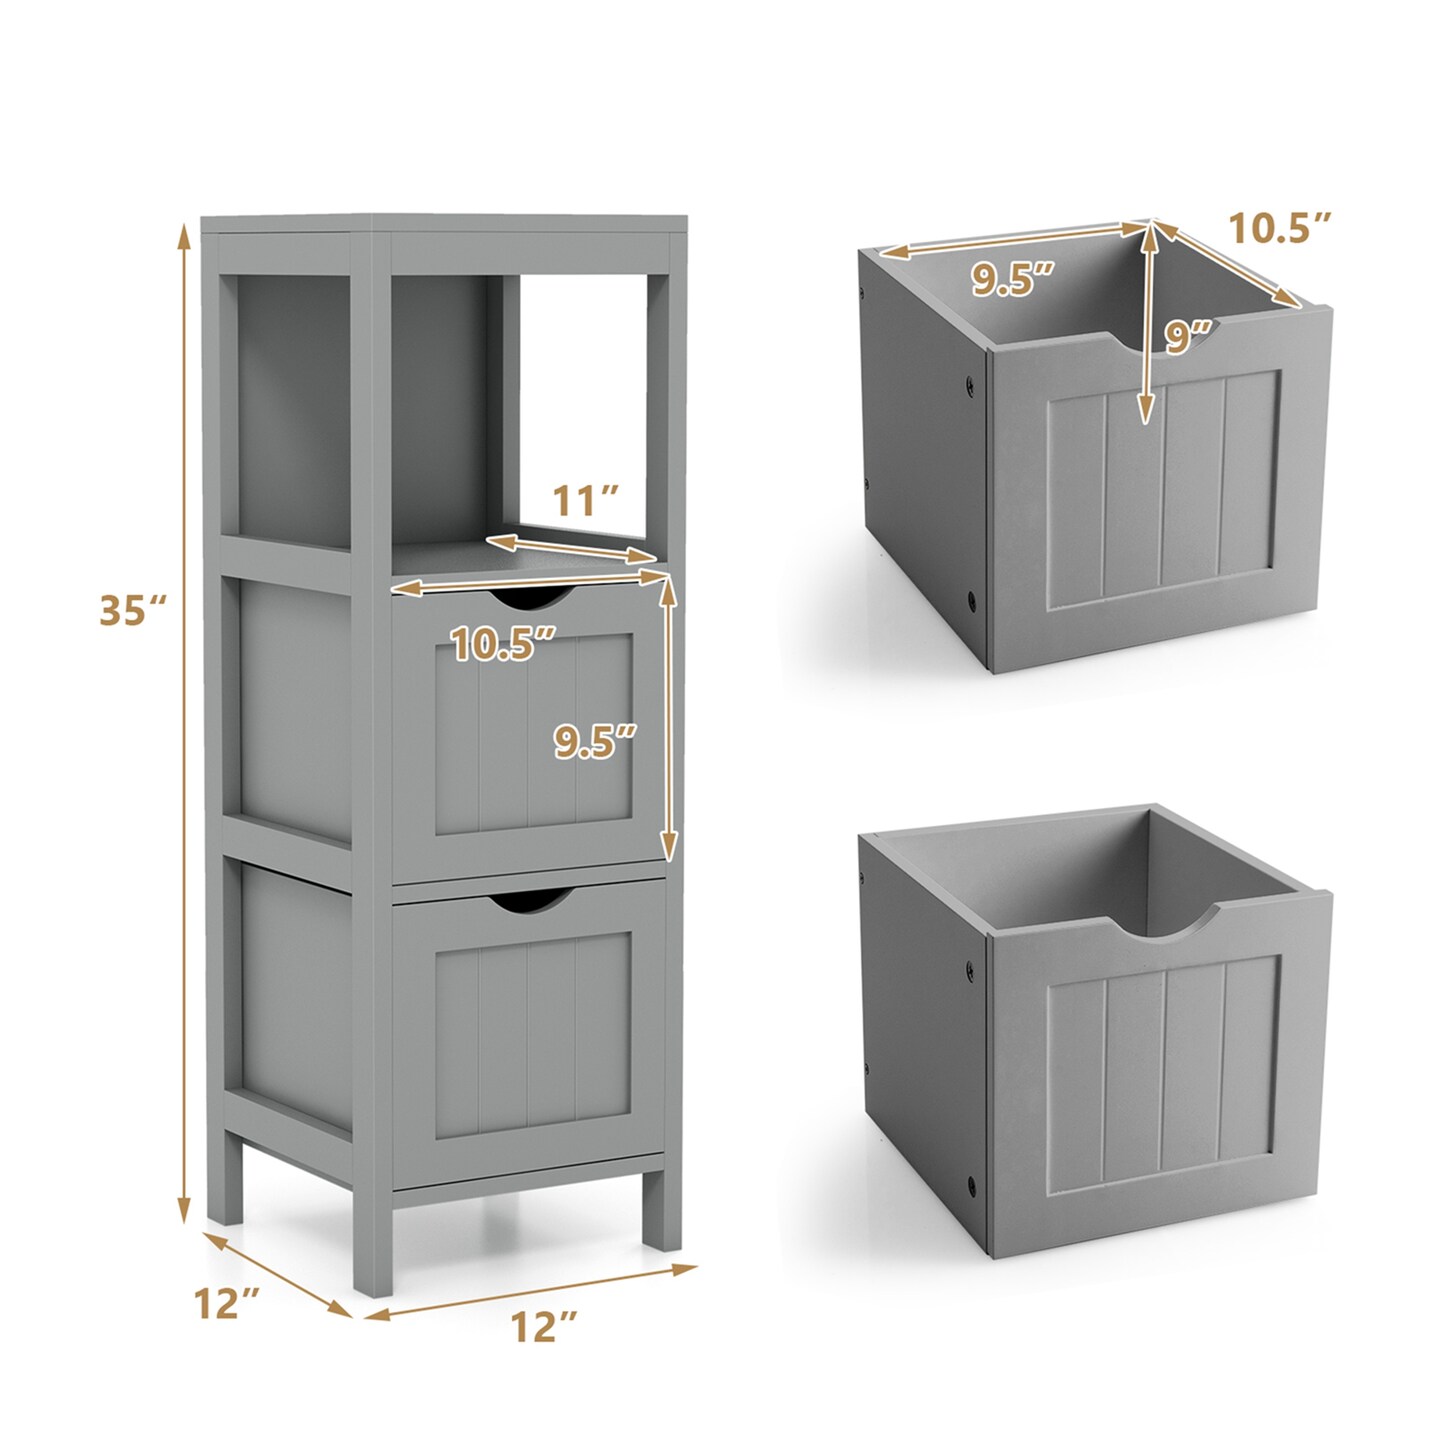 Costway Bathroom Floor Cabinet Freestanding Side Storage Organizer with 2 Removable Drawers Brown/Grey/Black